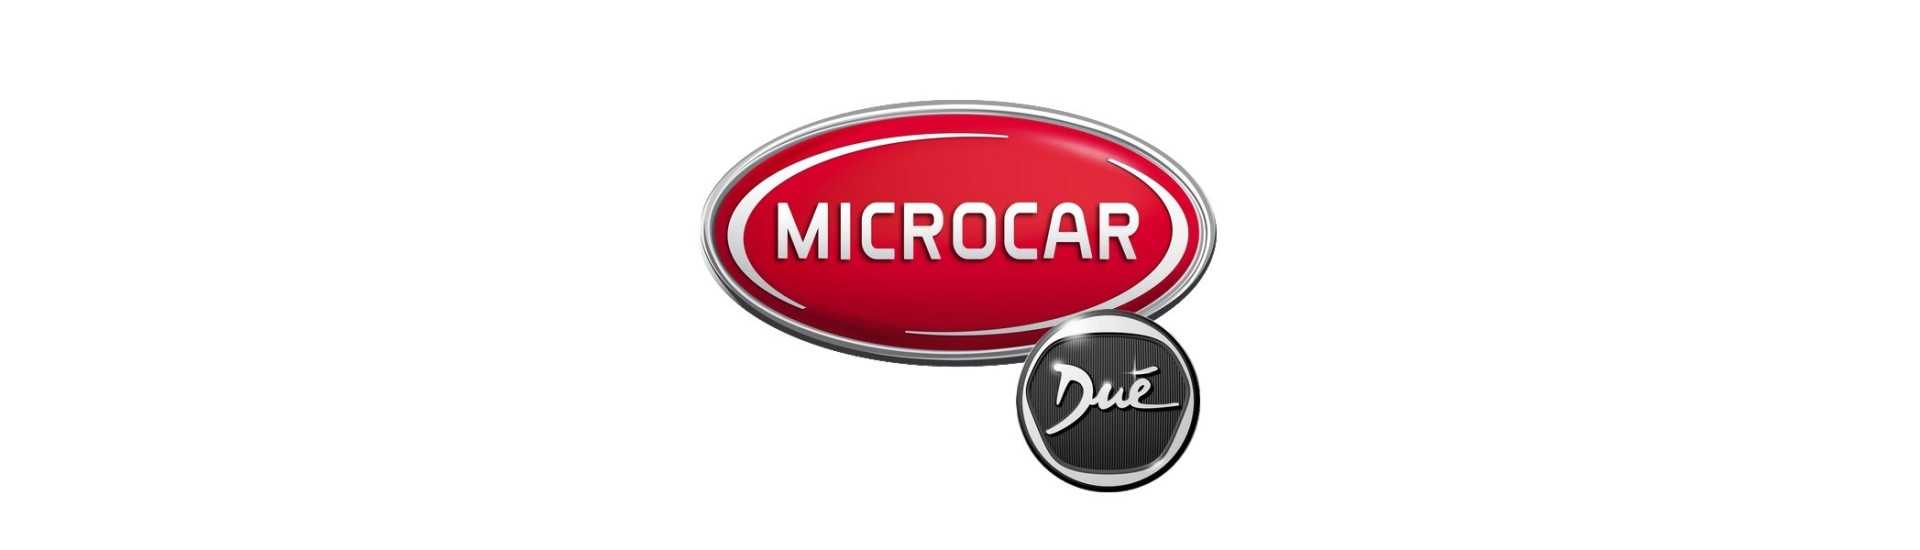 Moyeu completo mejores precios de coche sin permiso Microcar Dué